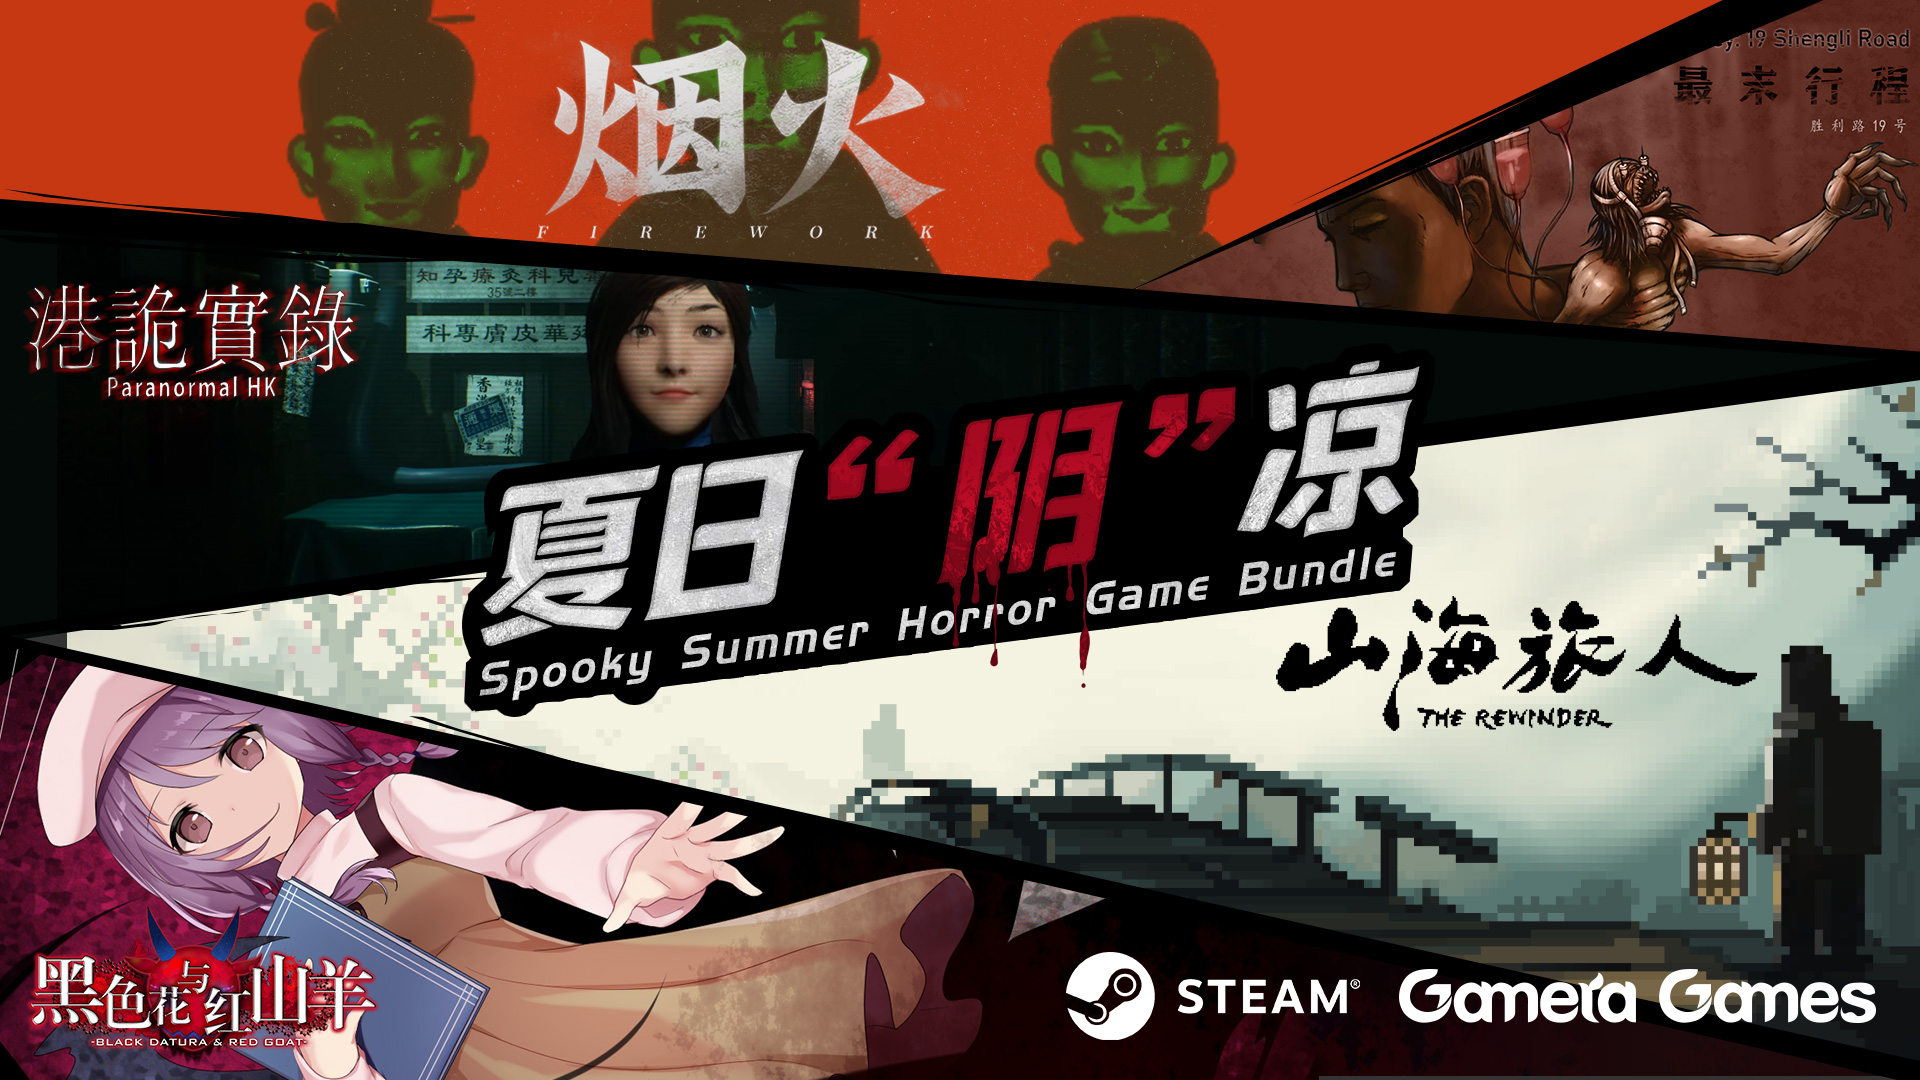 Steam夏促开启 Gamera Games推出“阴间游戏”同捆包